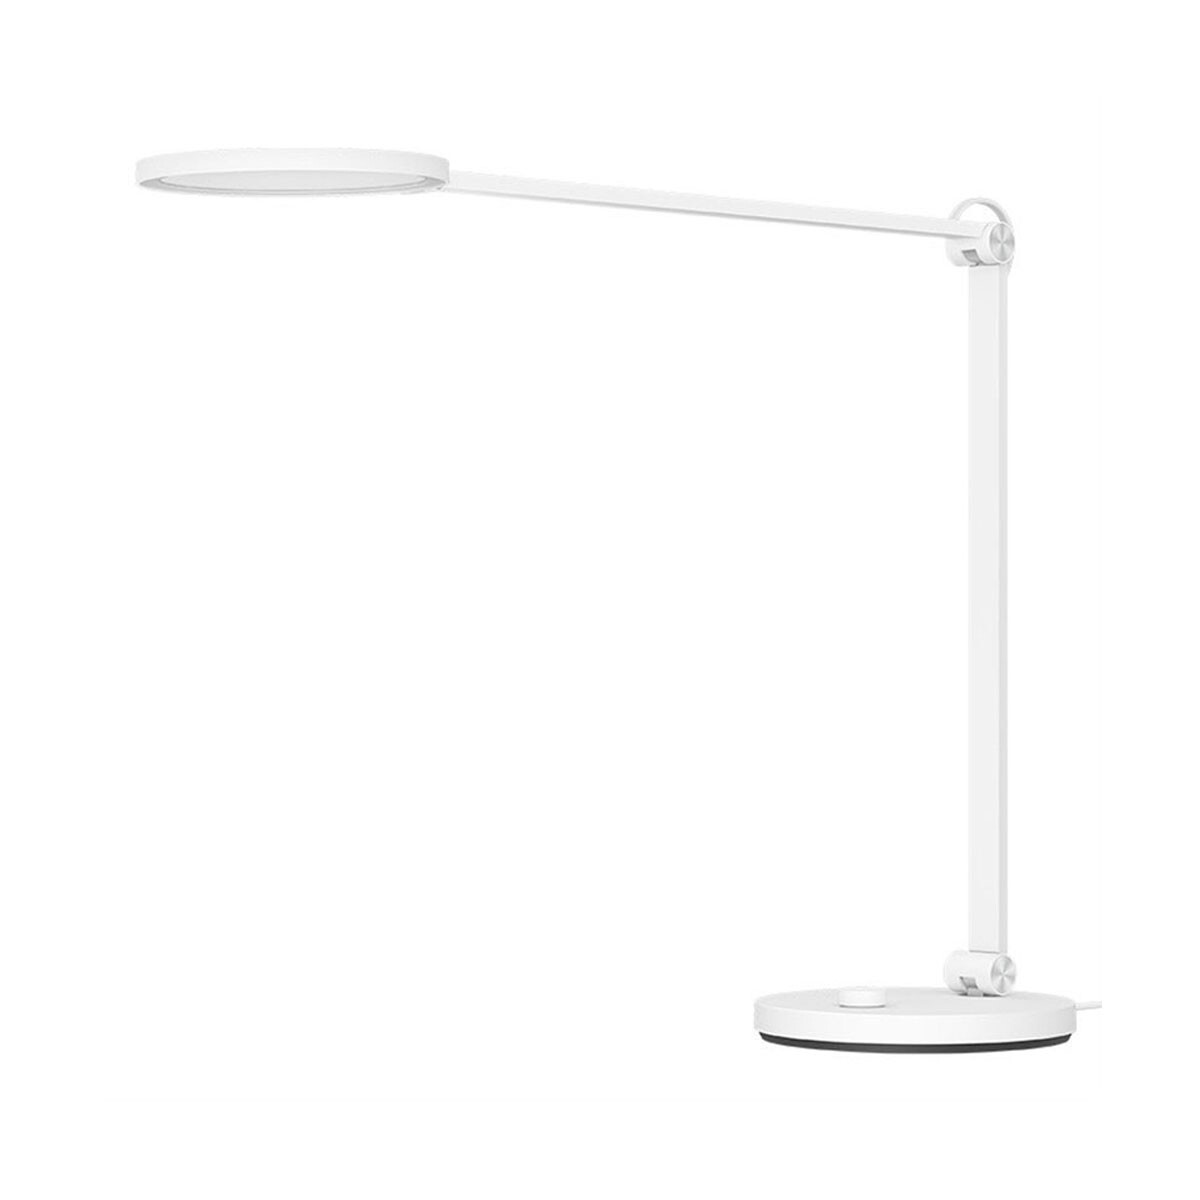 Mi smart led desk lamp pro xiaomi - Blanca 